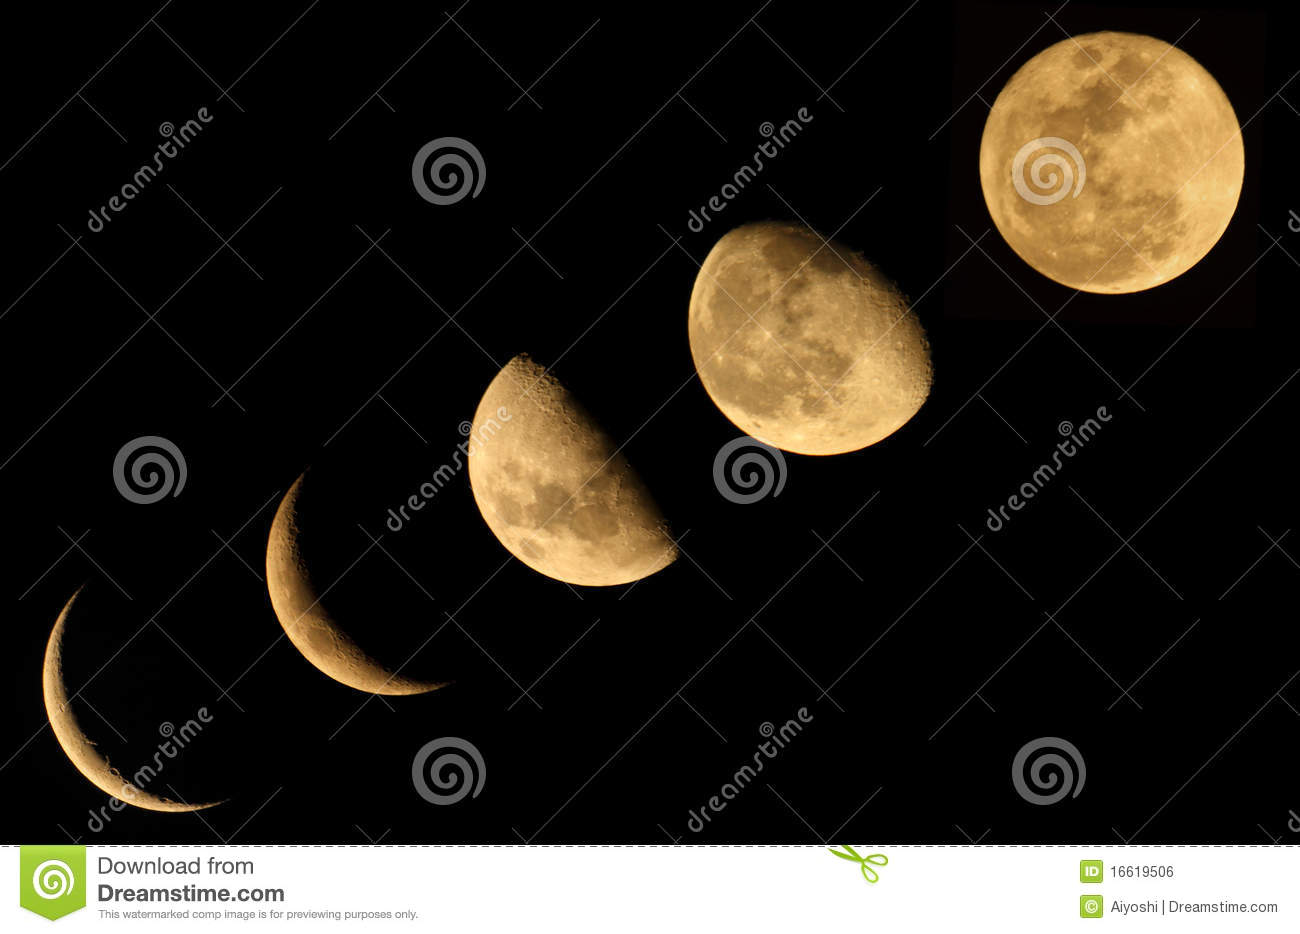 The Moon Phase Royalty Free Stock Image   Image  16619506